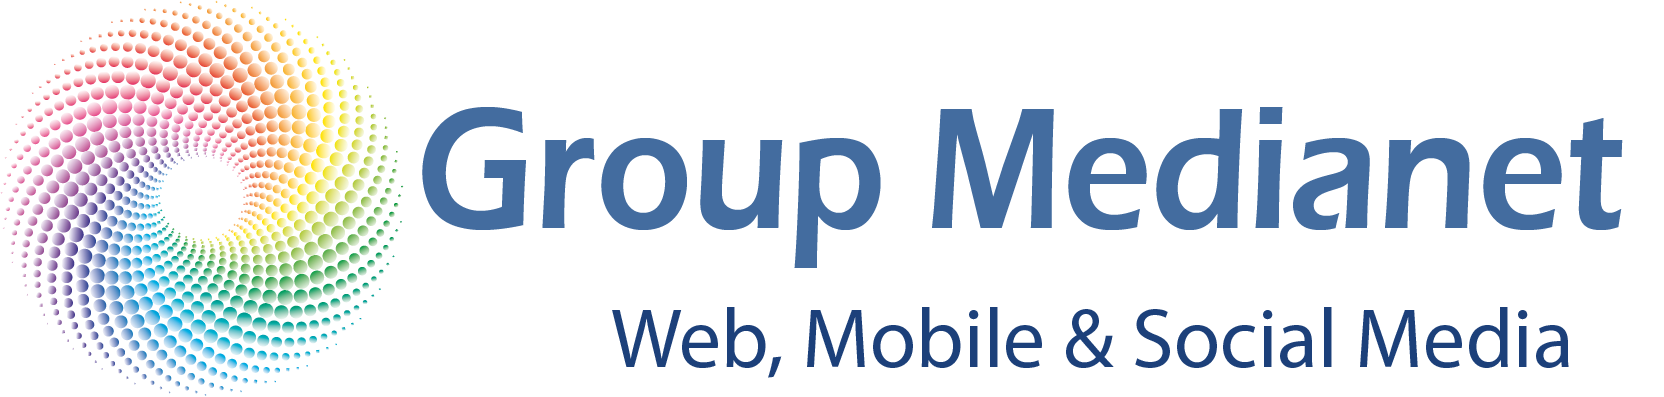 groupmedianet Logo